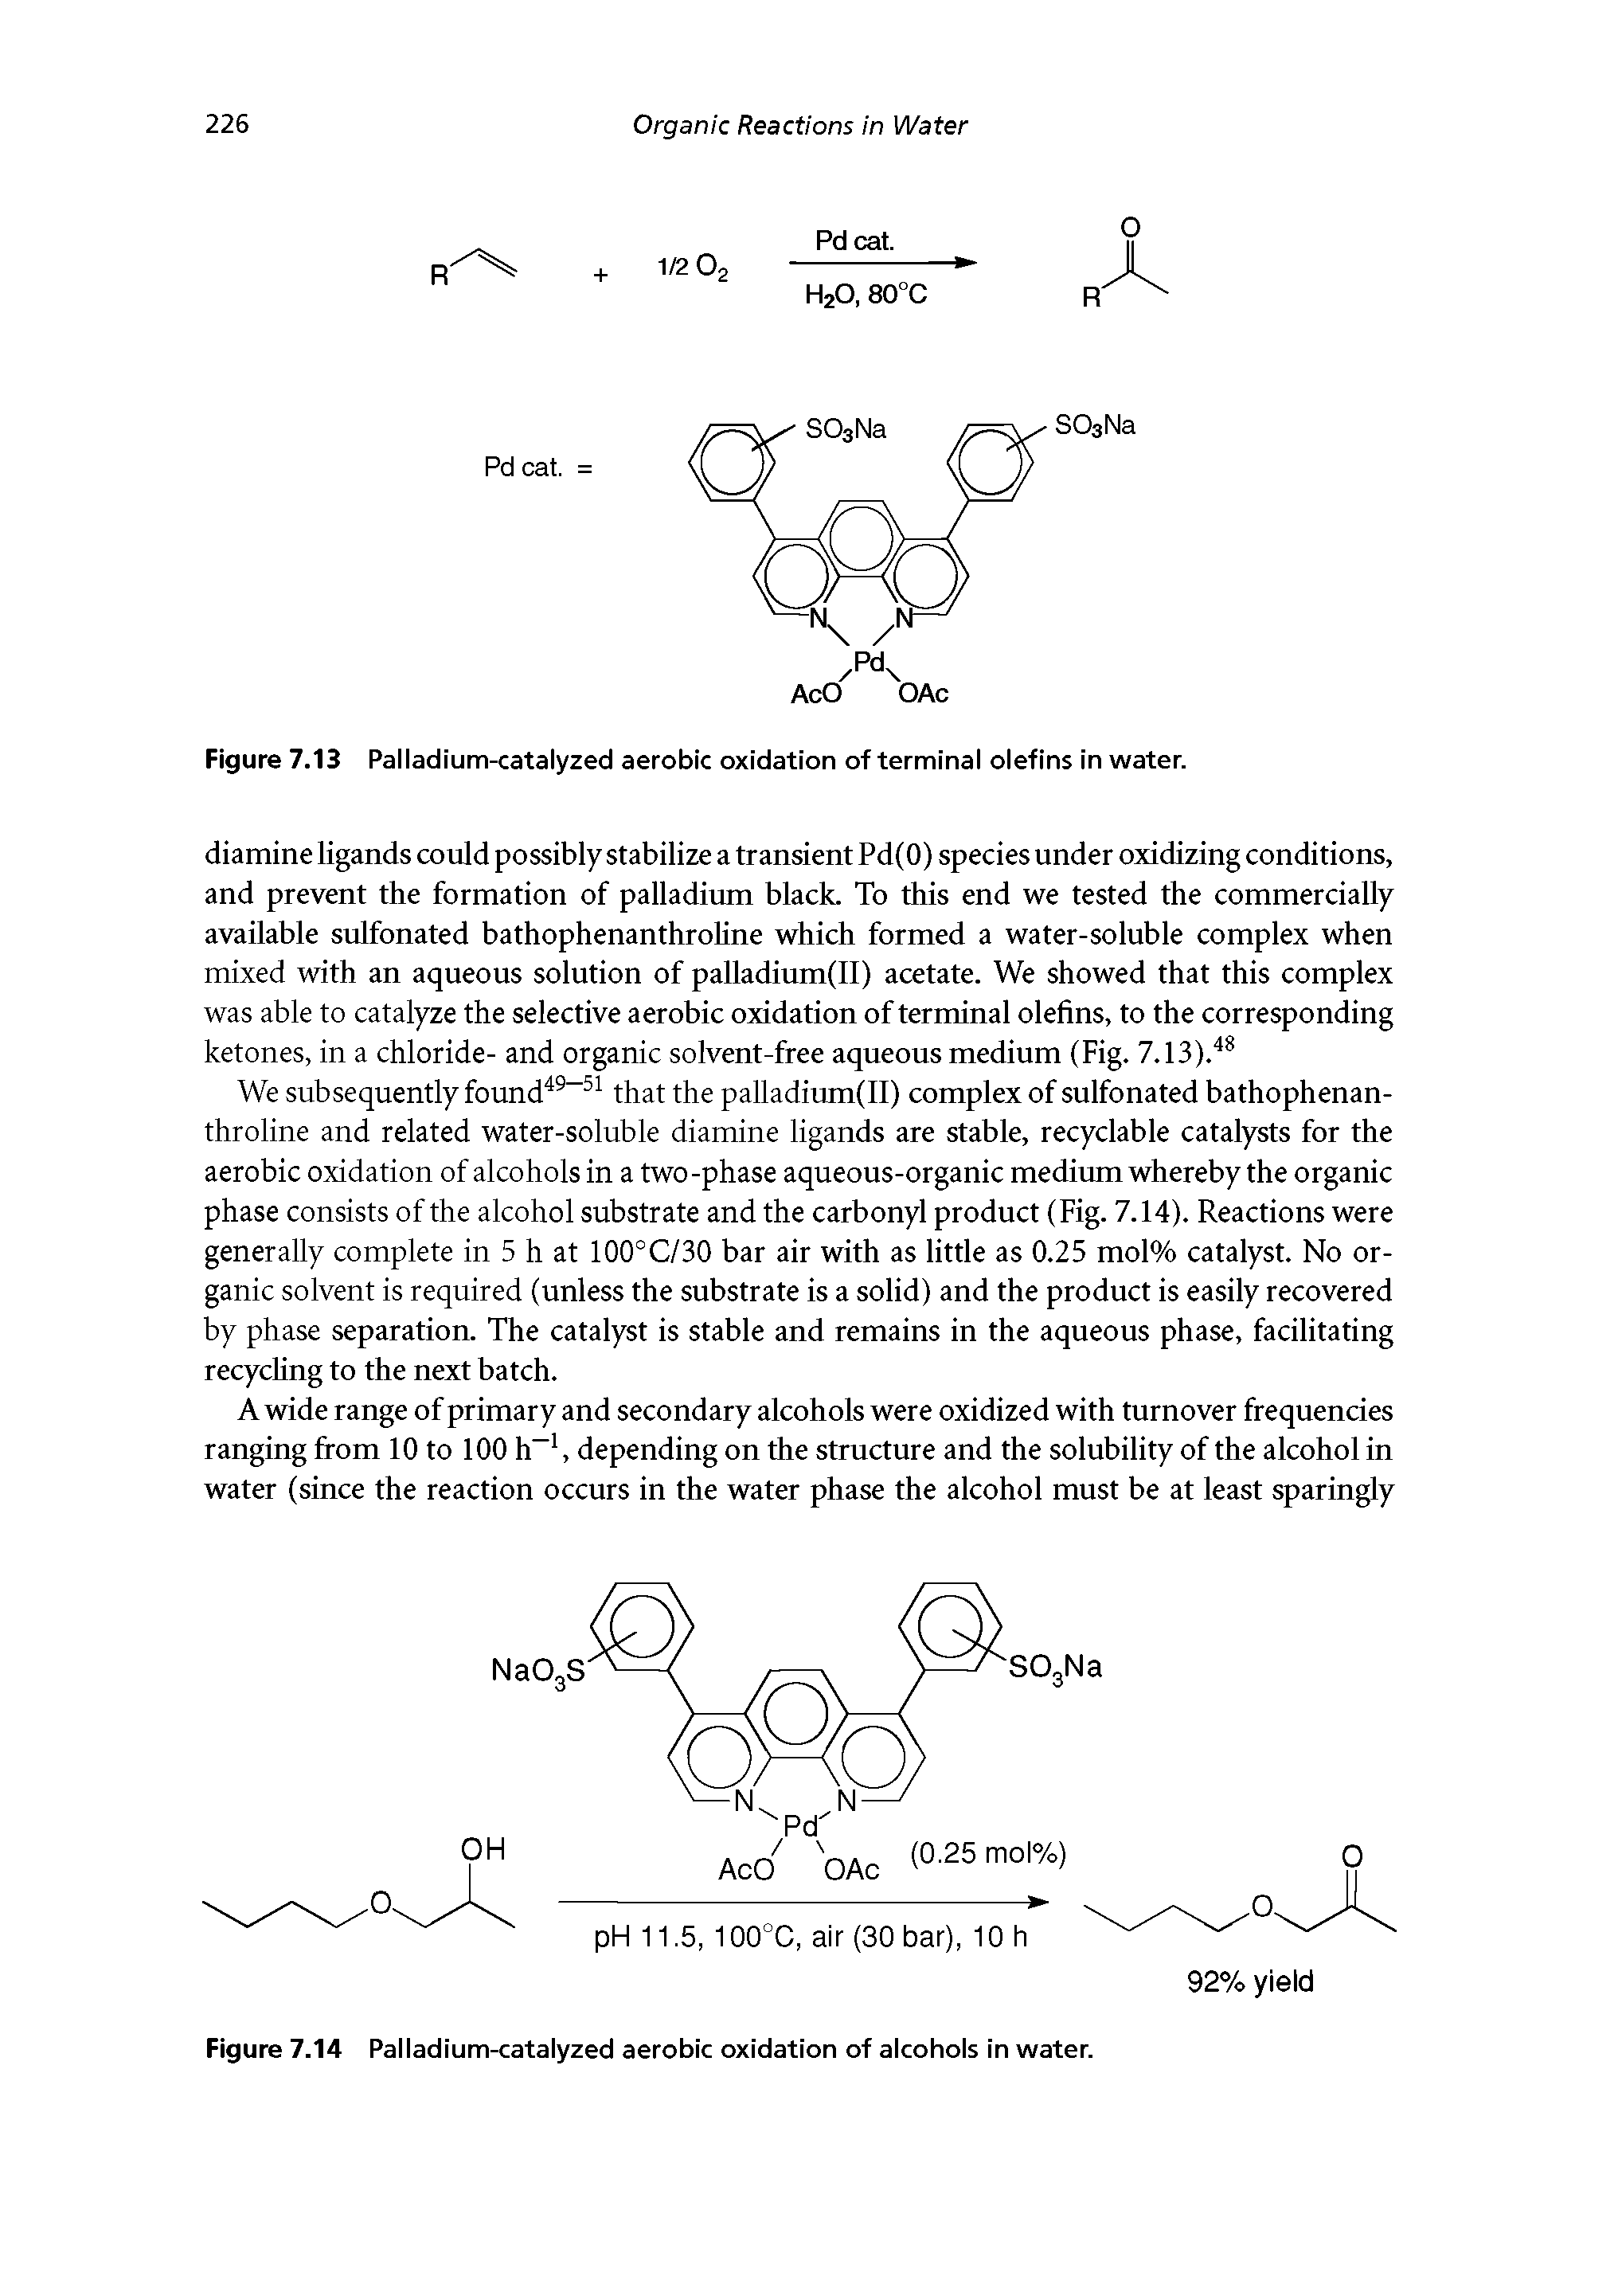 Figure 7.13 Palladium-catalyzed aerobic oxidation of terminal olefins in water.